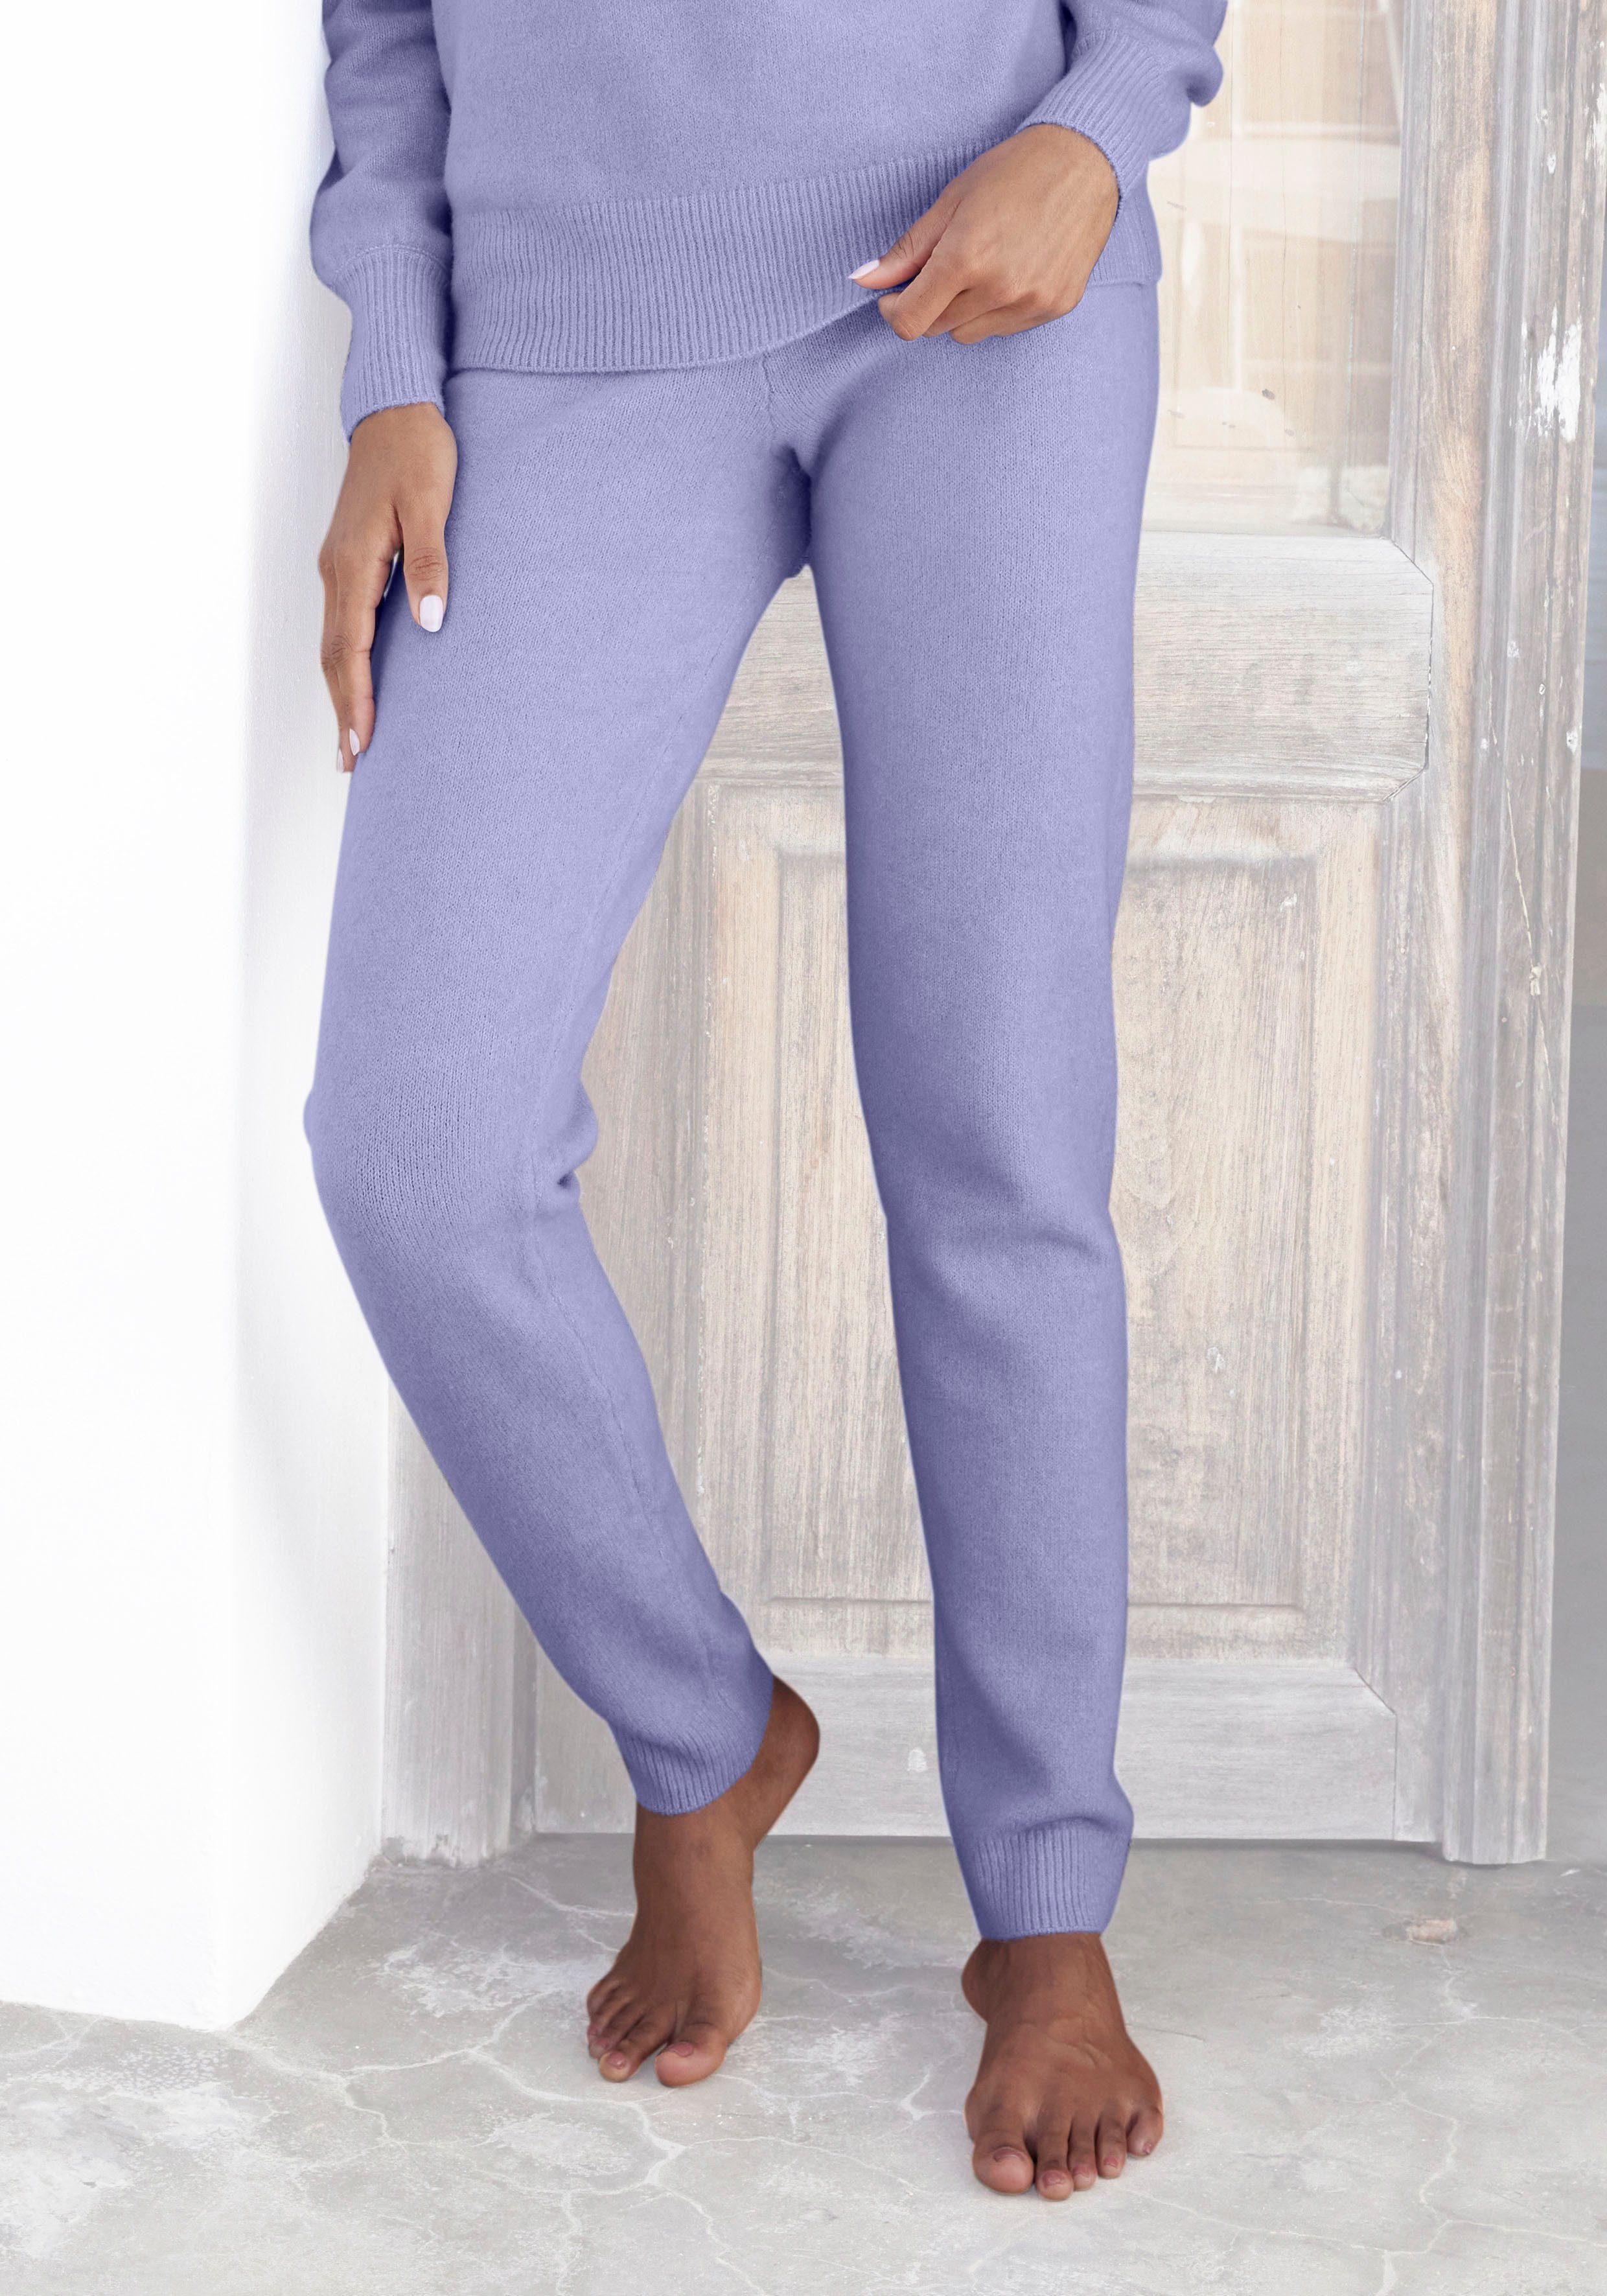 LASCANA Strickhose -Loungehose aus weichem Strick, Loungewear hellblau